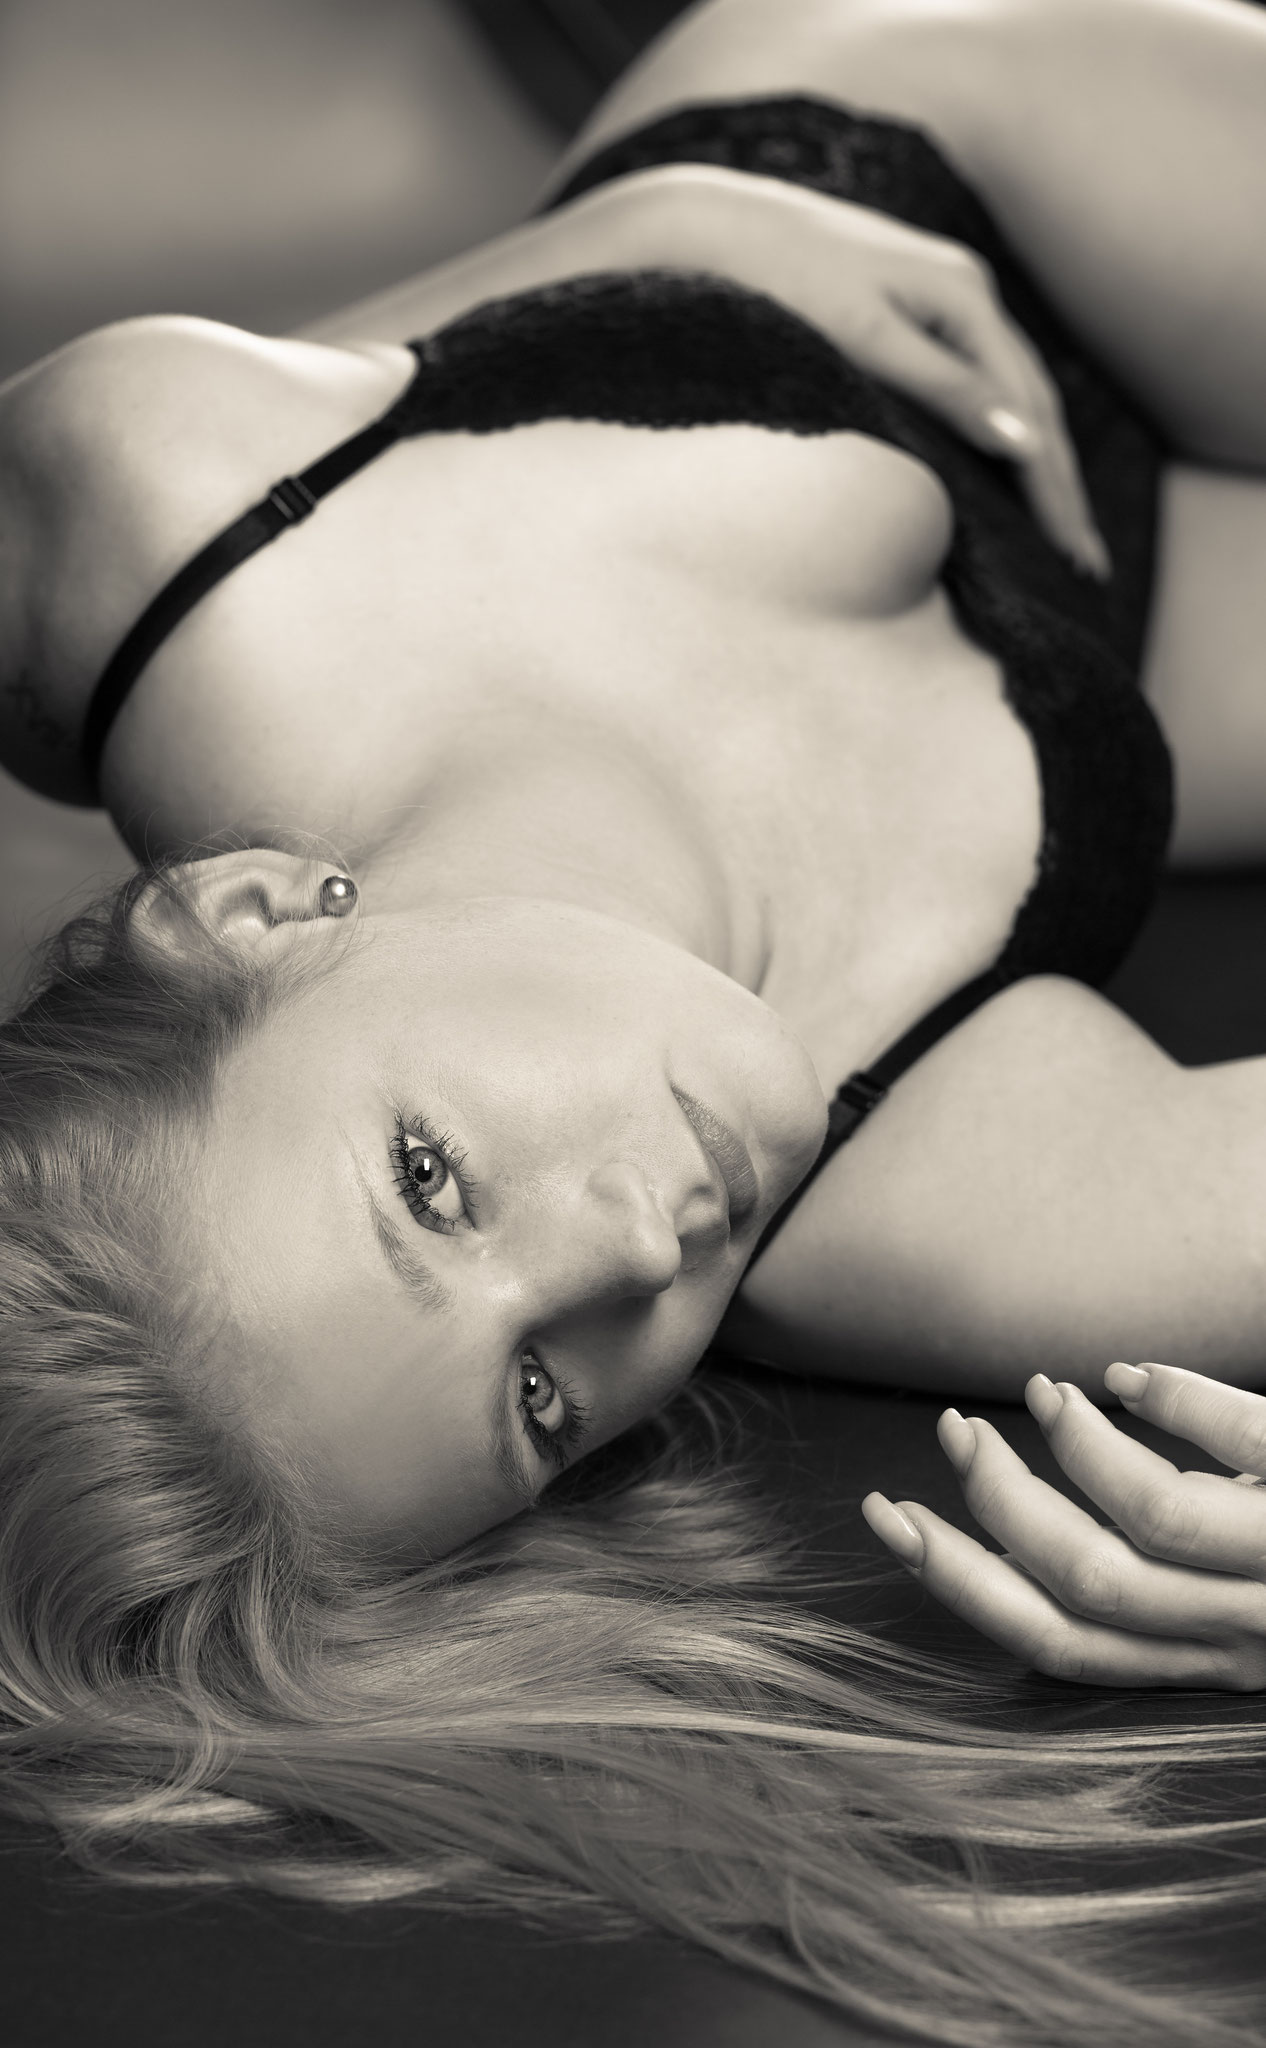 Fotos mit Freude - Fotostudio fotografiert Ladies in Unterwäsche beim Dessous Shooting im Atelier Erlangen - erotic Fotograf Nico Tavalai #eroticshooting #sexyphoto #dessous